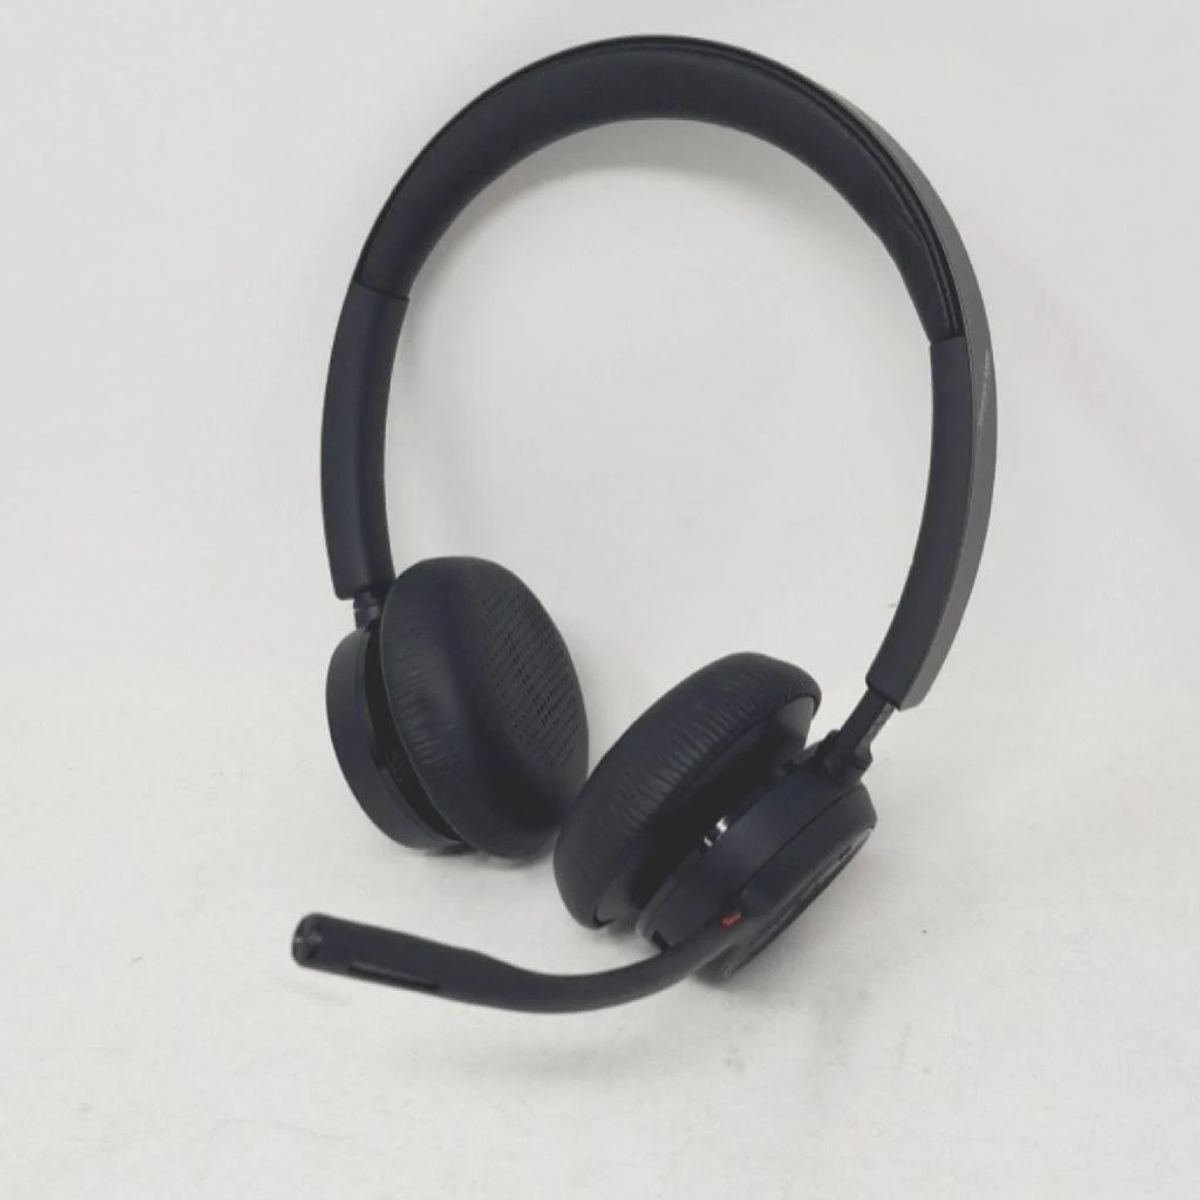 Voyager Bluetooth POLY Schwarz 4320, On-ear kopfhörer Bluetooth